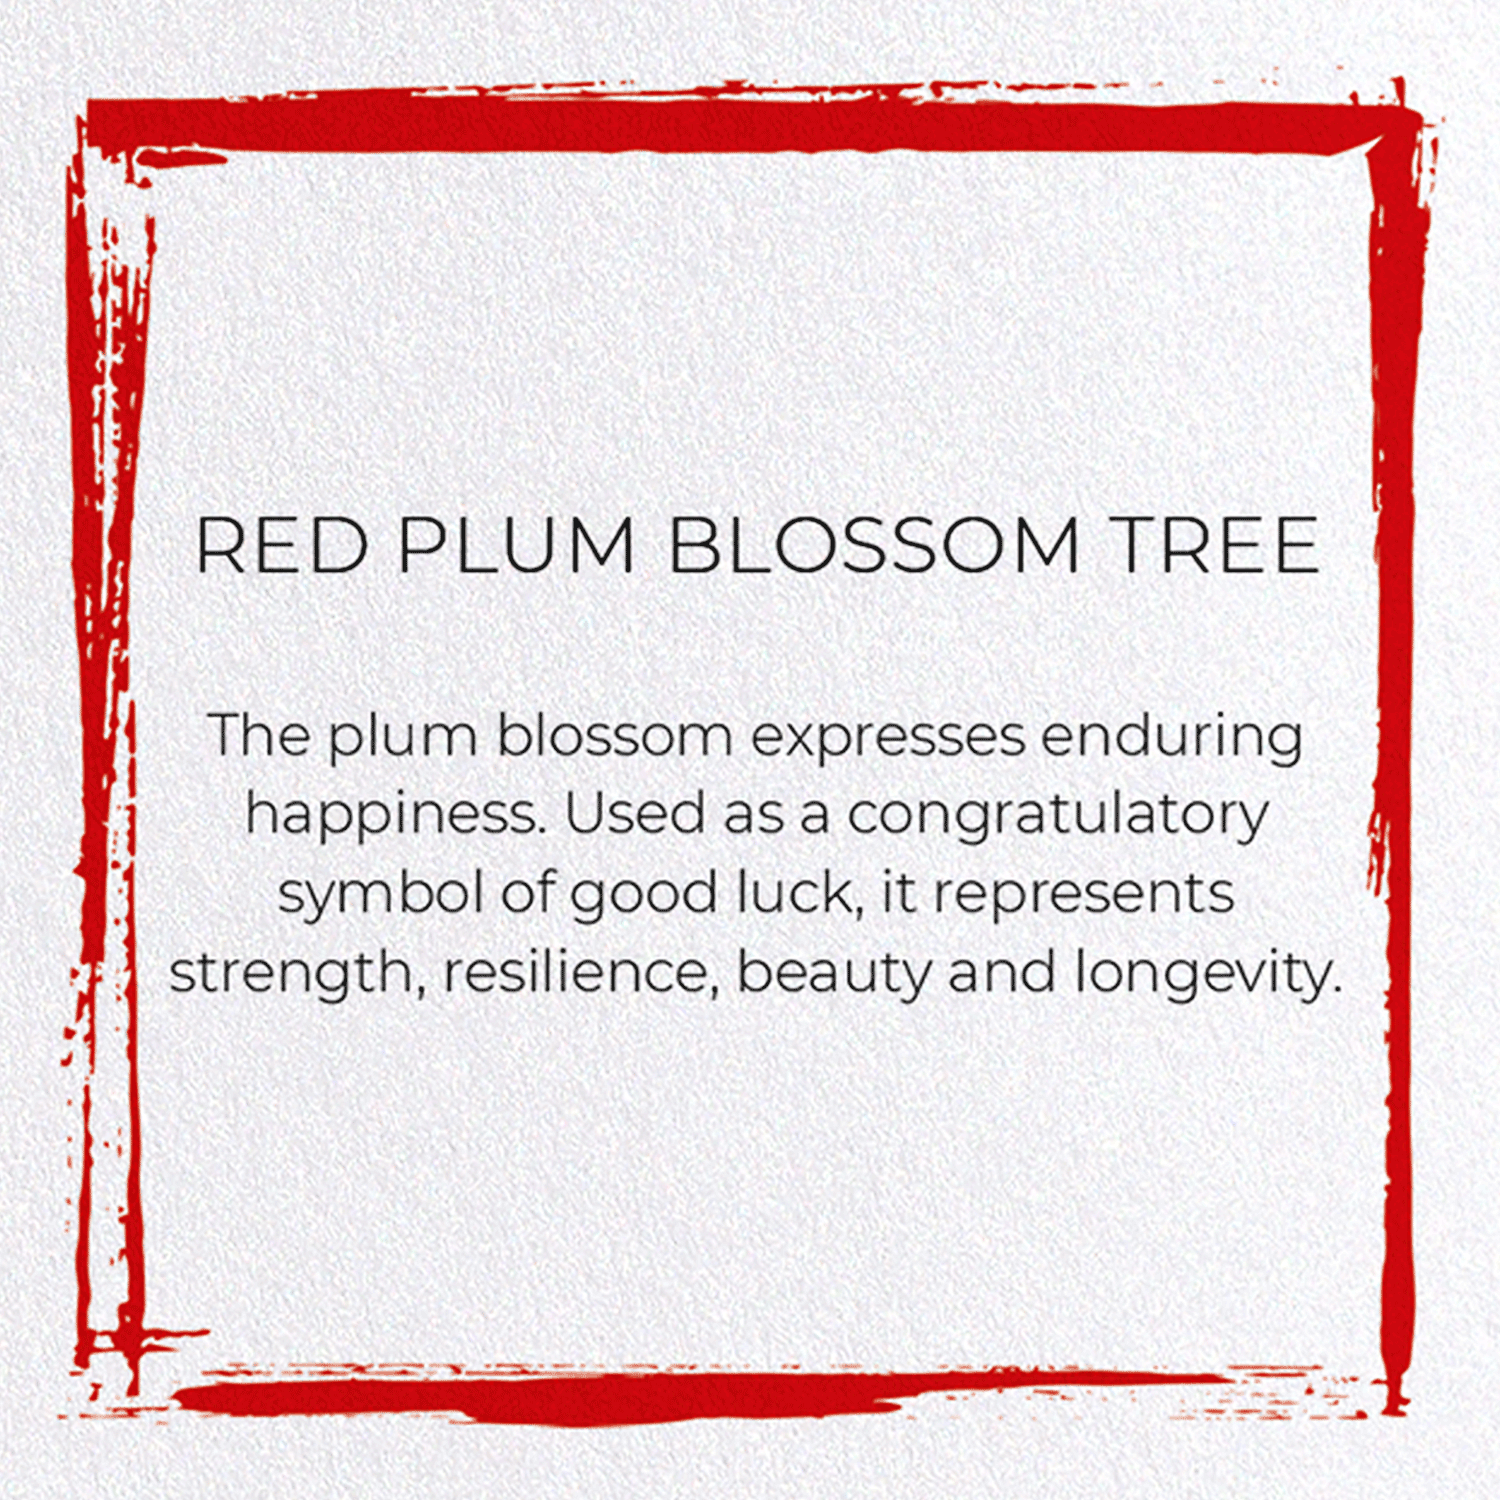 RED PLUM BLOSSOM TREE: Japanese Greeting Card